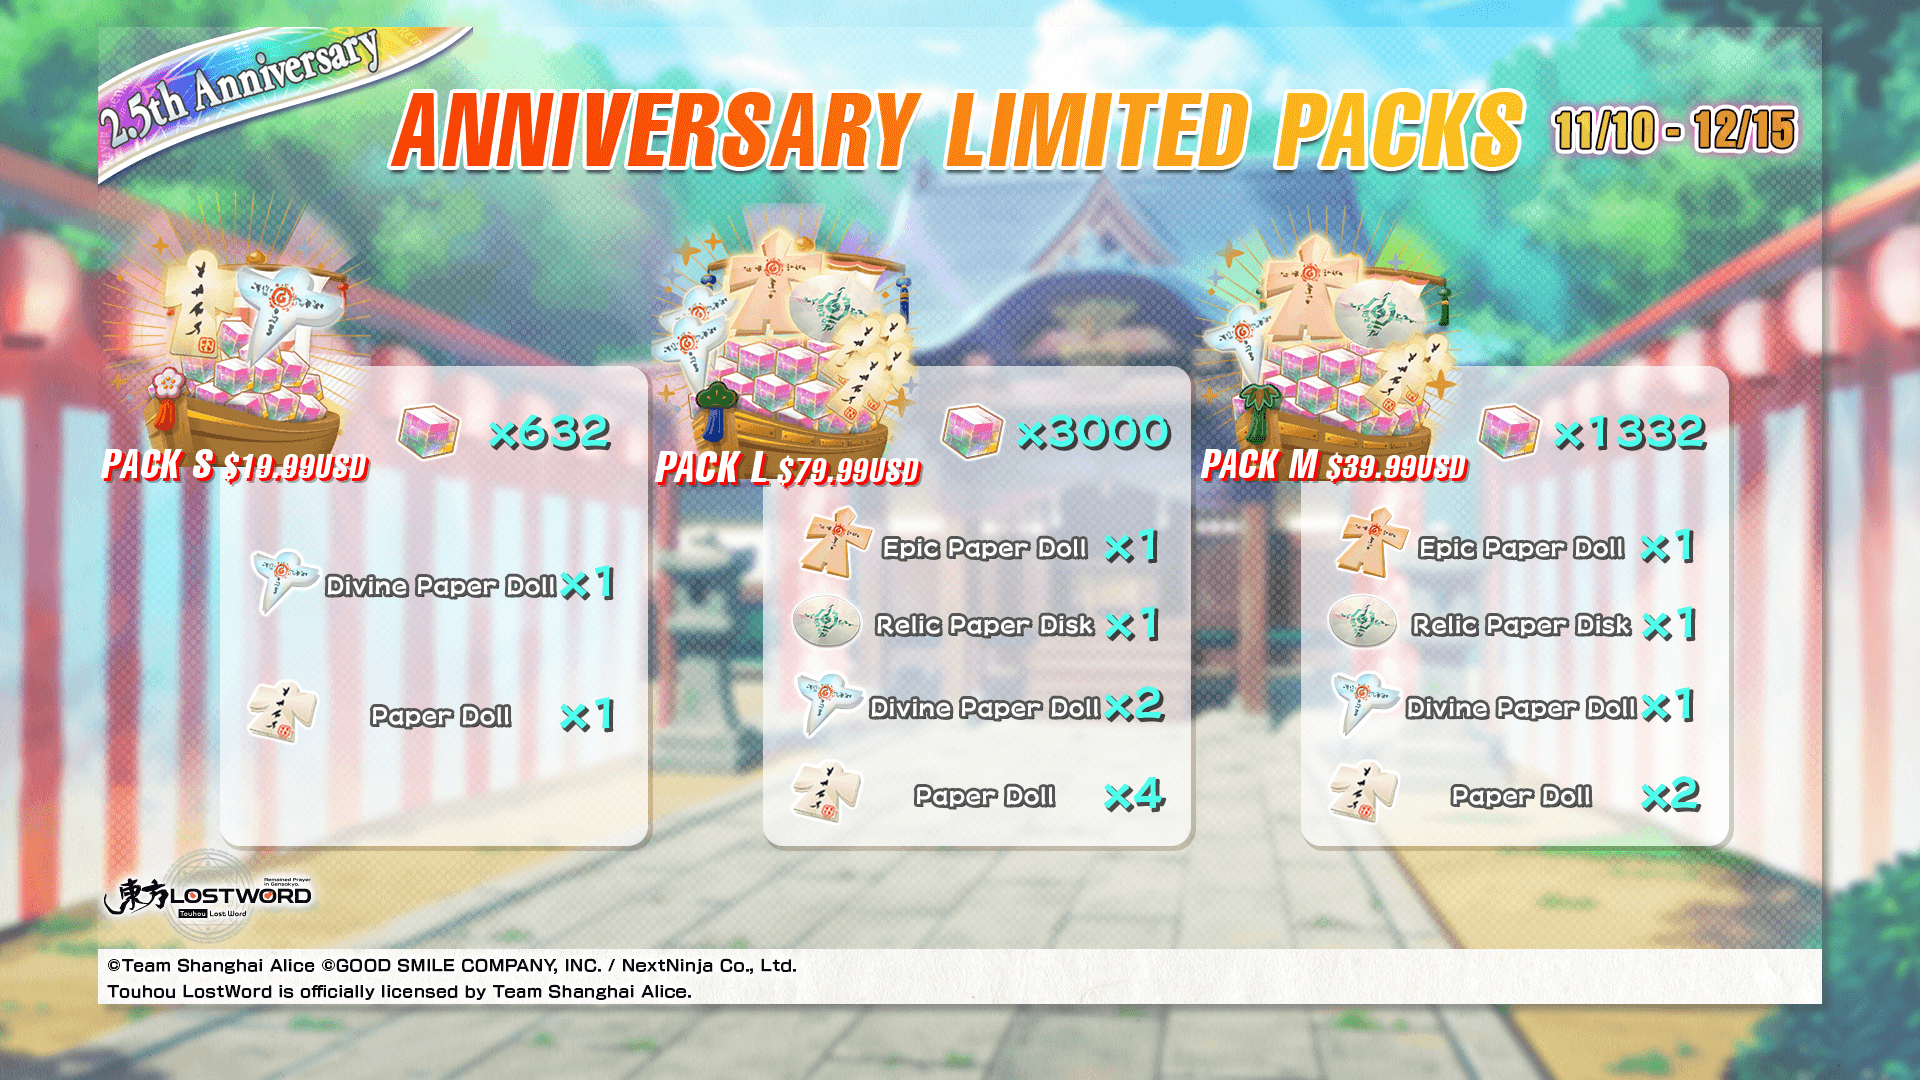 Anniversary Limited Packs